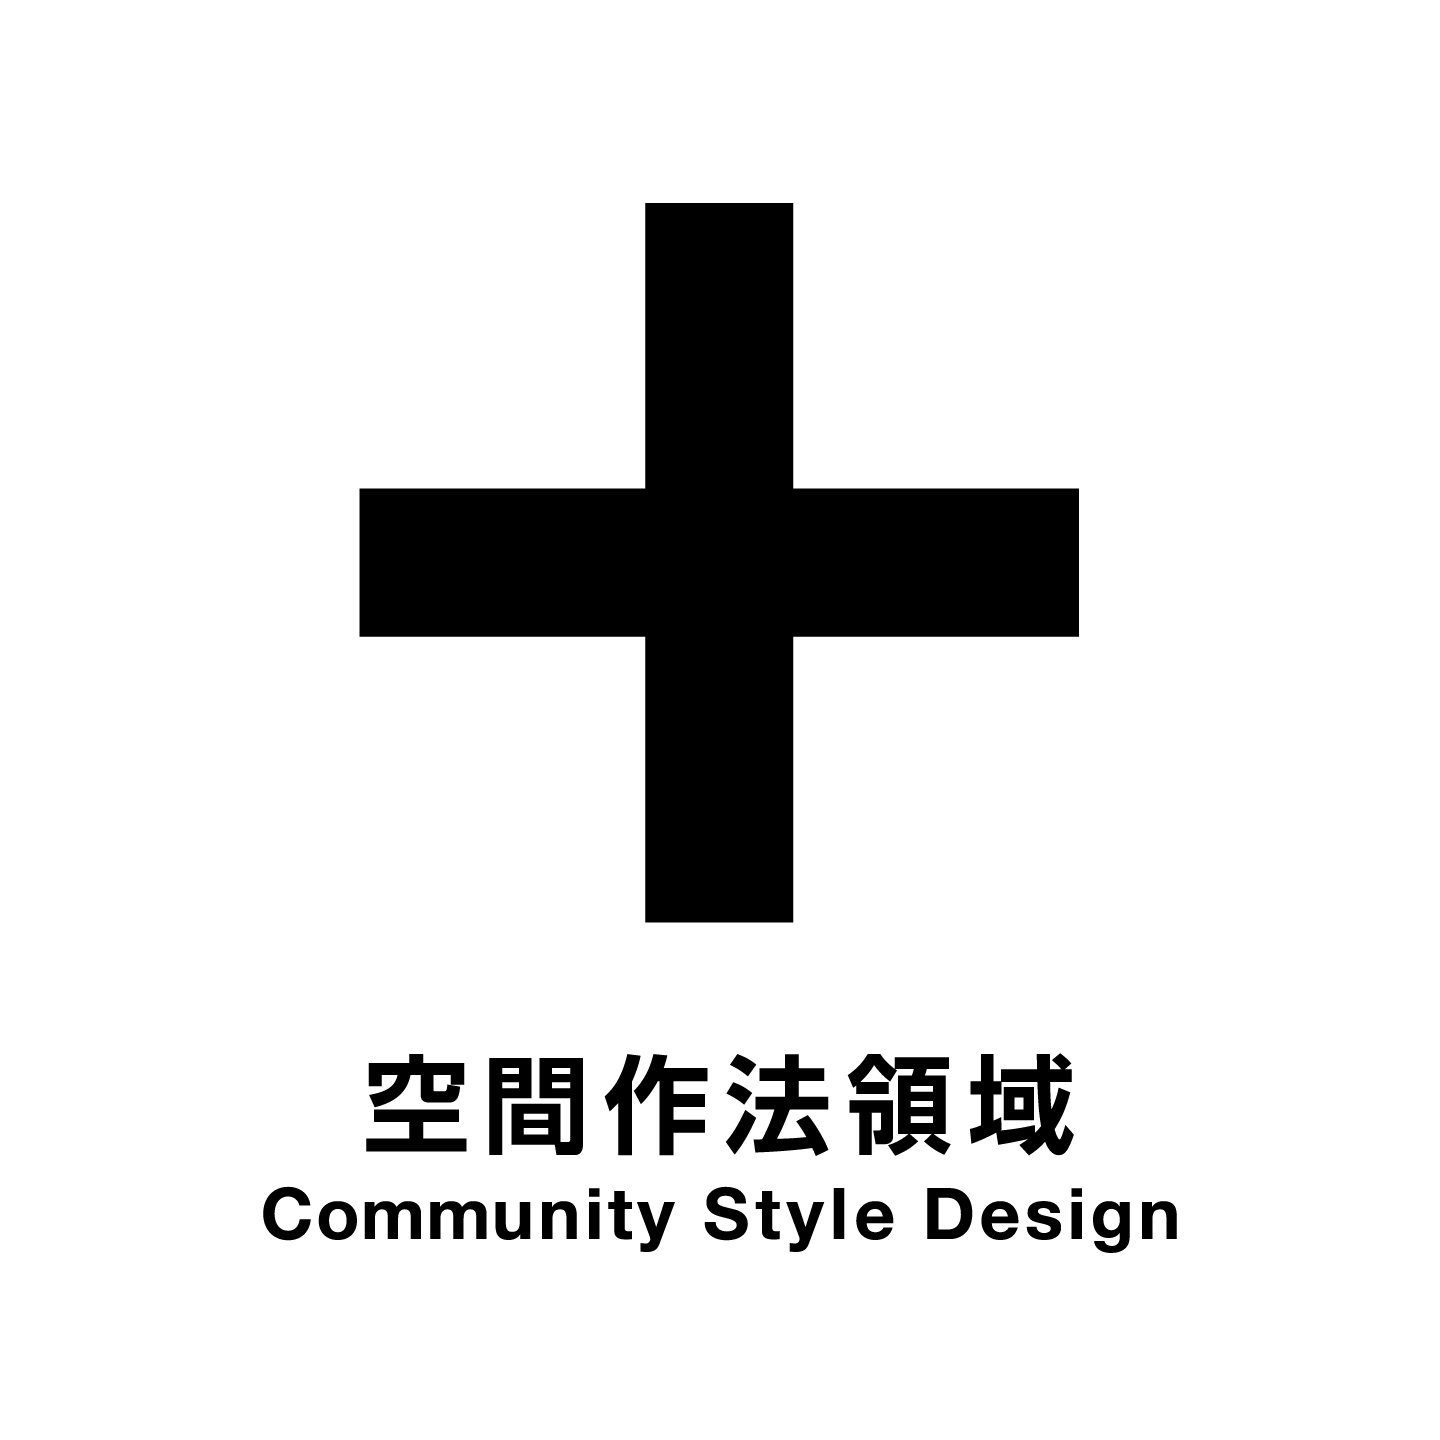 空間作法領域 Community Style Design